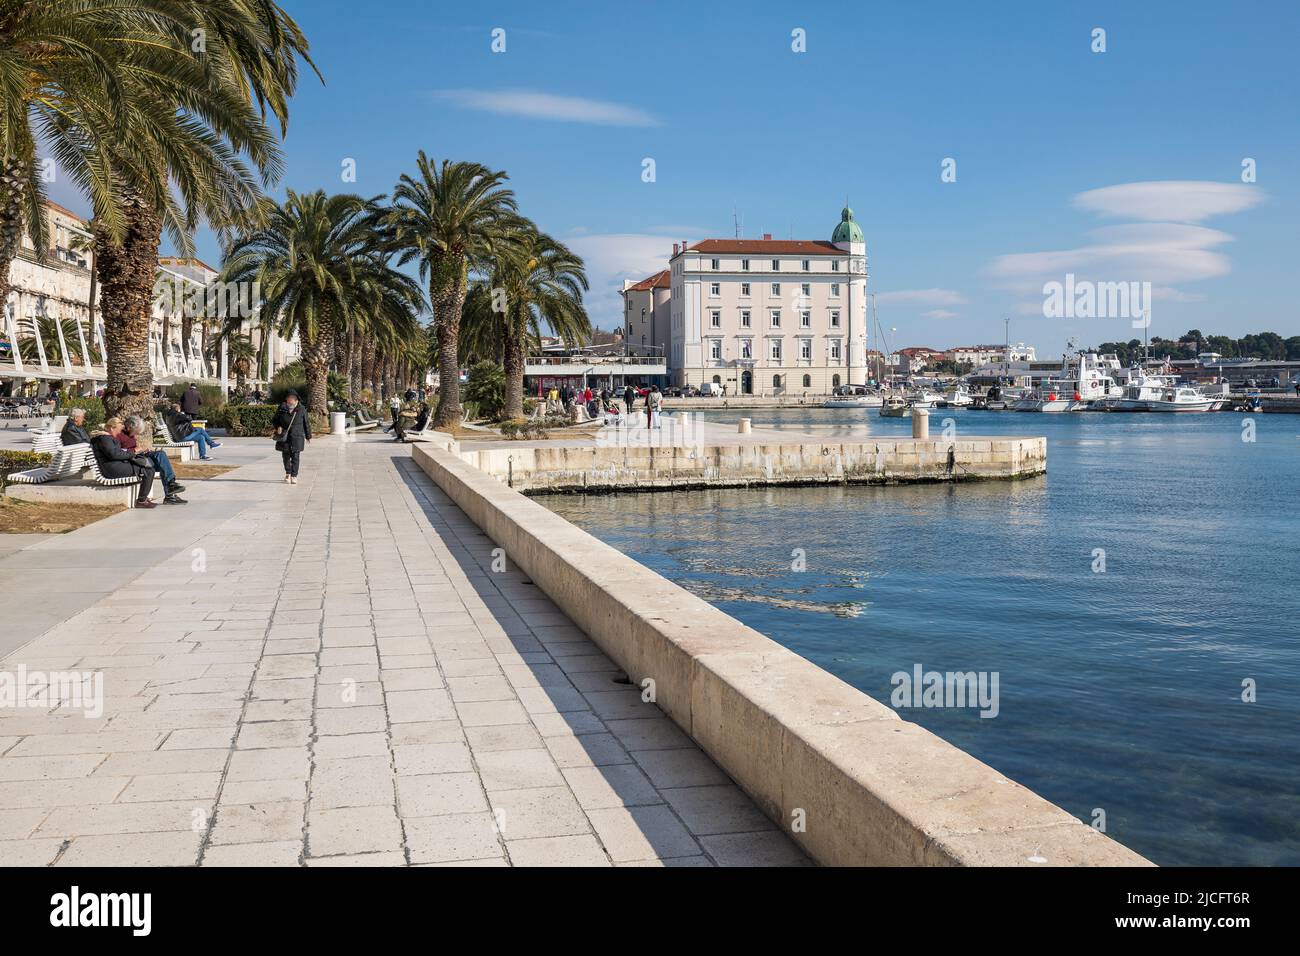 Port promenade and port authority in the building in the back, Split, Split-Dalmatia County, Dalmatia, Croatia, Europe Stock Photo